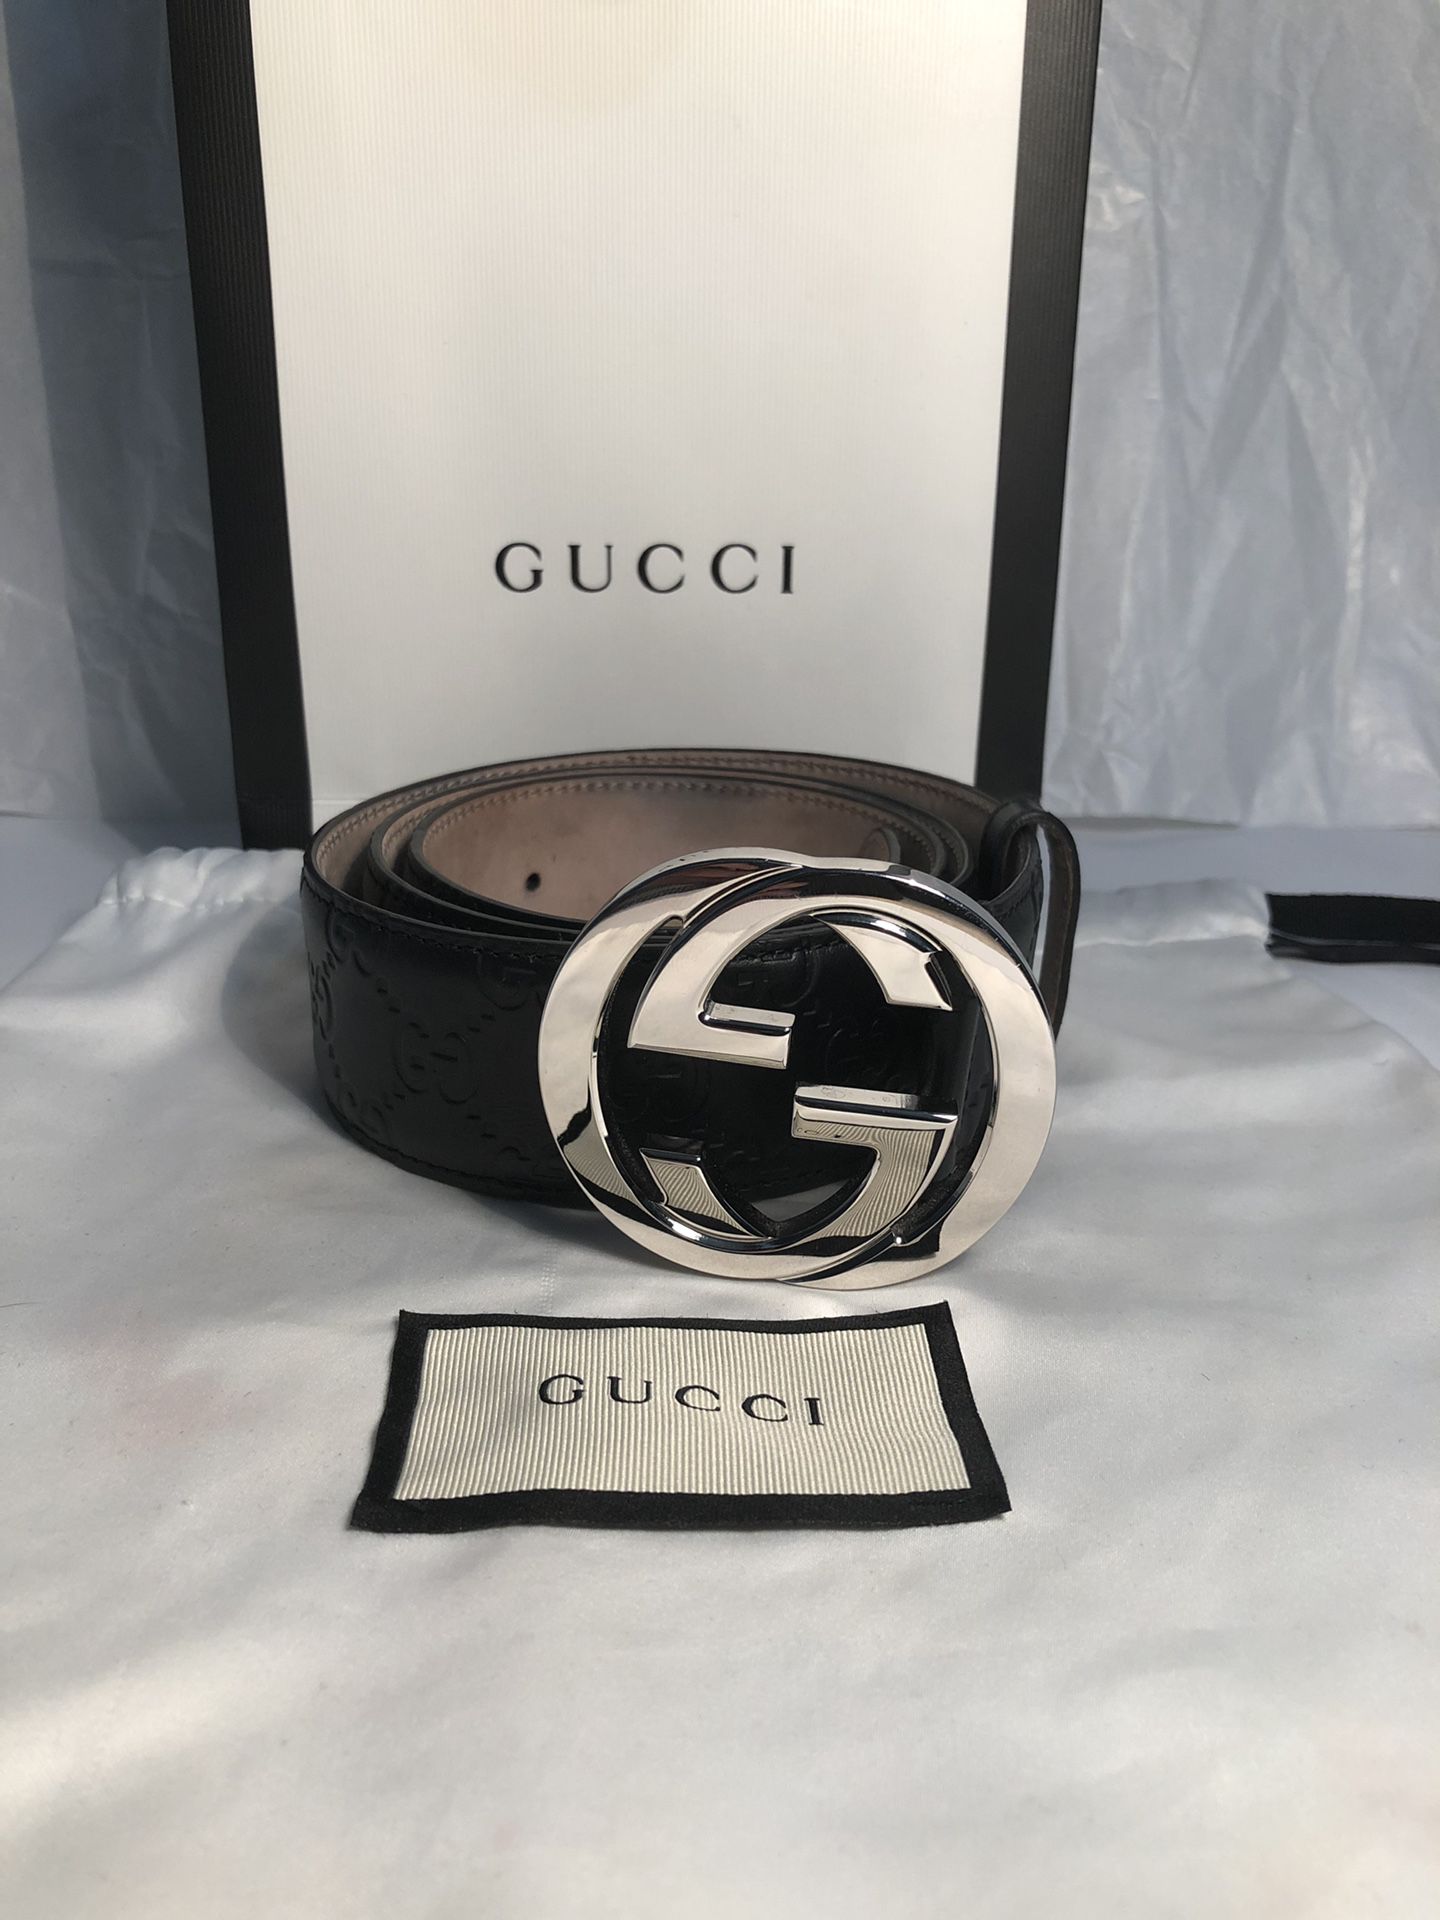 verontreiniging langs Herinnering Authentic “Gucci” Belt for Sale in La Plata, MD - OfferUp